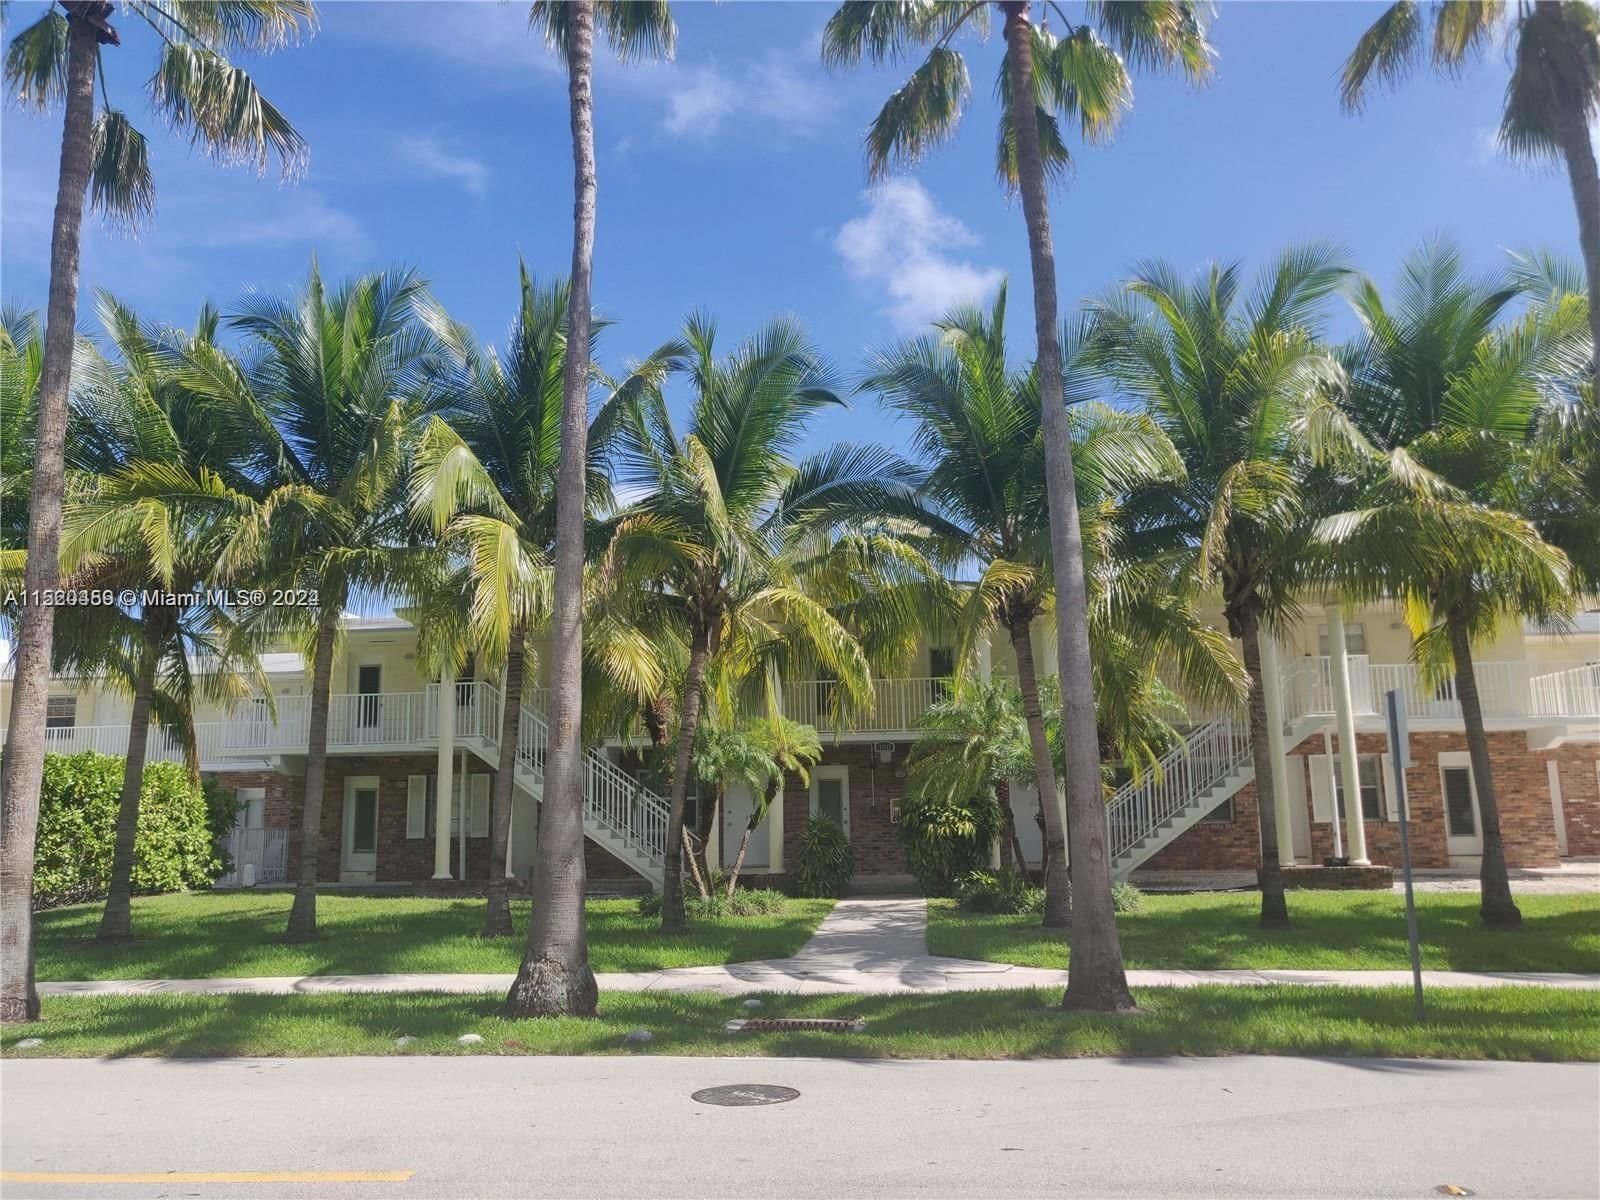 Real estate property located at 100 Sunrise Dr #16, Miami-Dade County, SUNRISE CLUB CONDO, Key Biscayne, FL